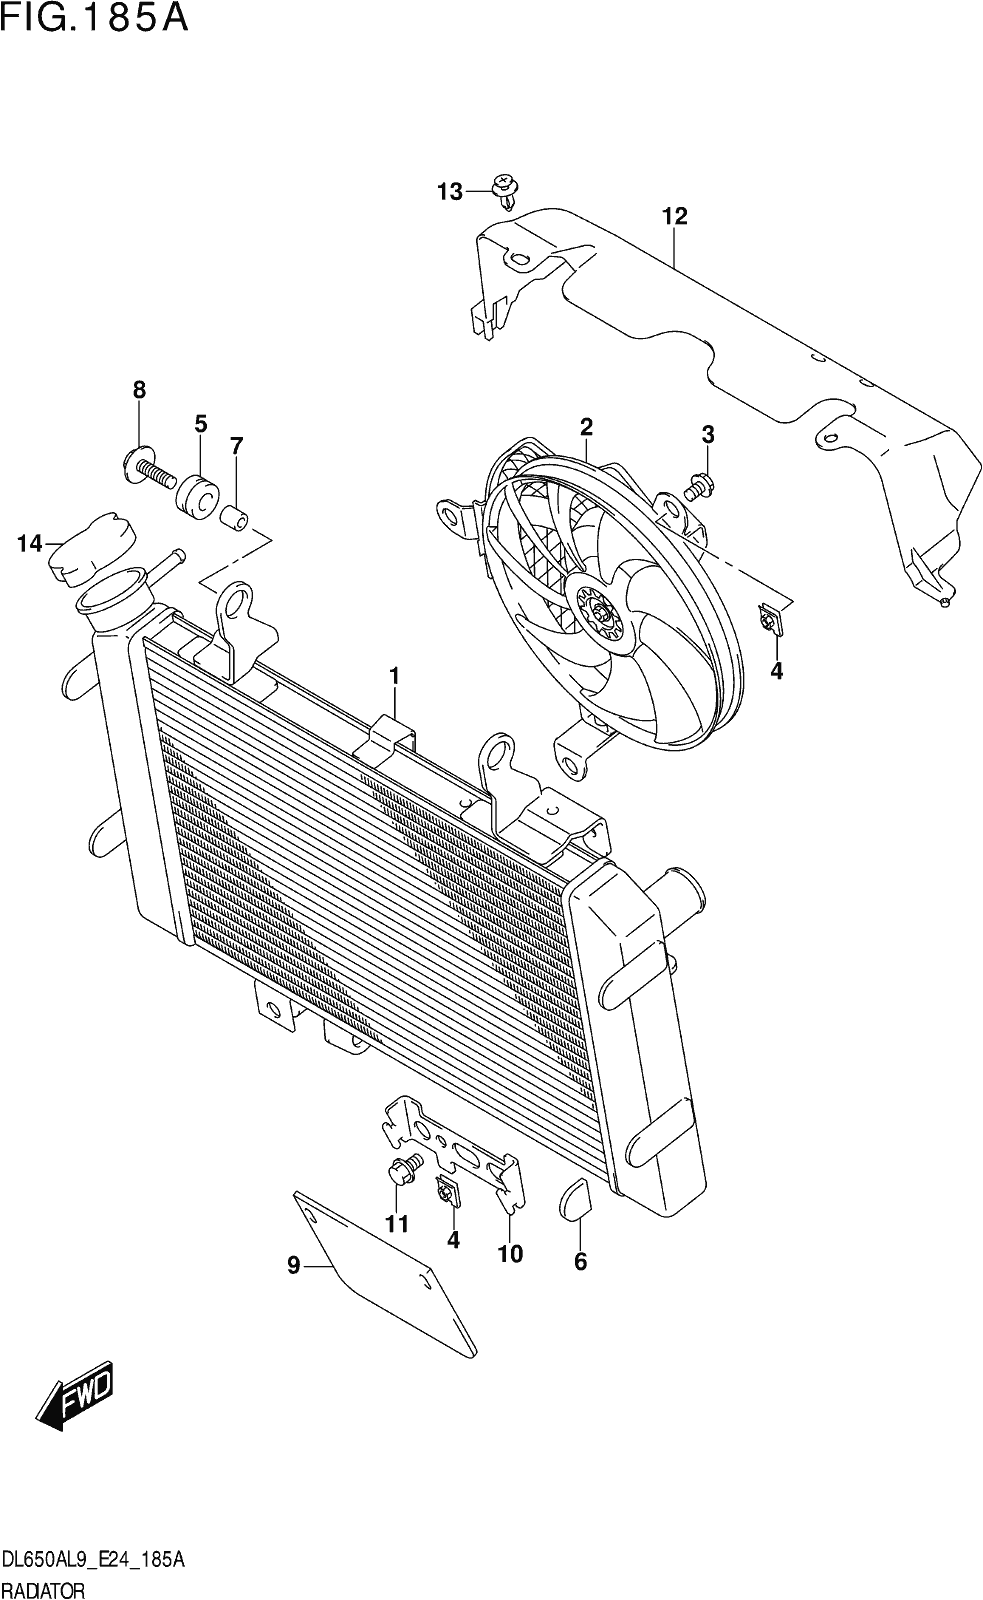 Fig.185a Radiator